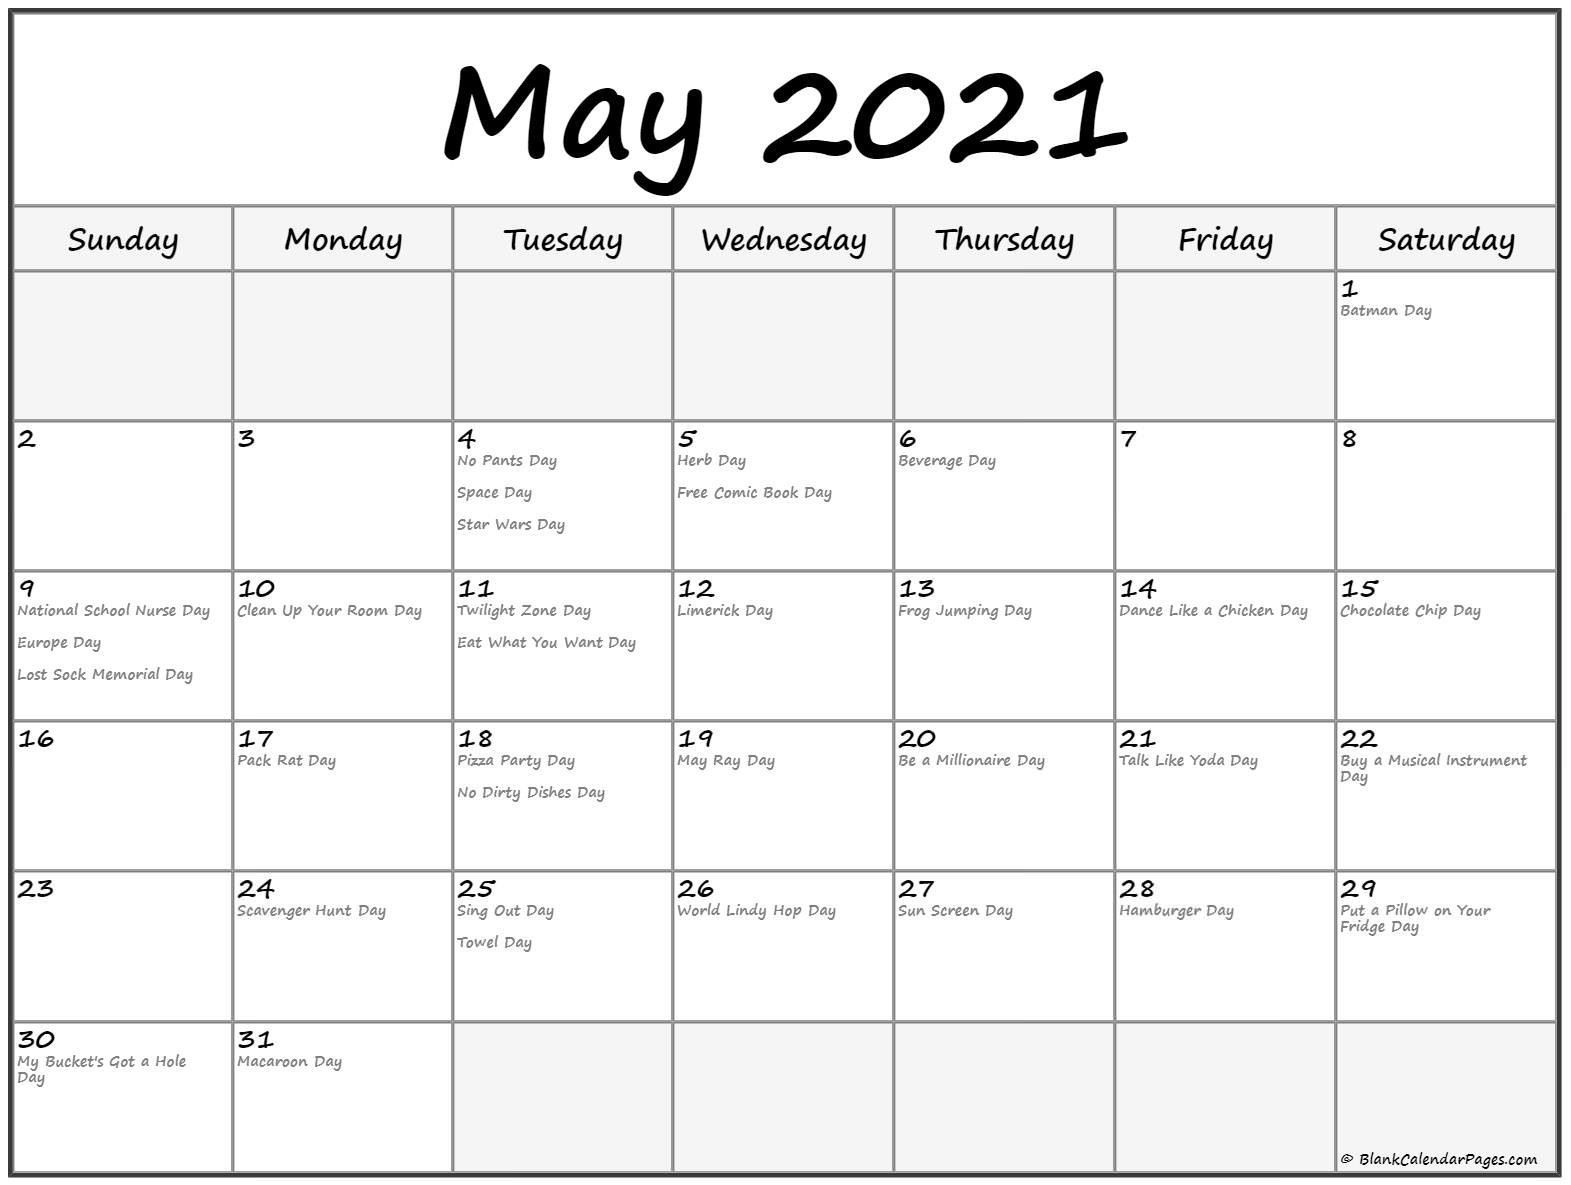 Collection Of May 2021 Calendars With Holidays-Calendar 2021 2021 Calendar